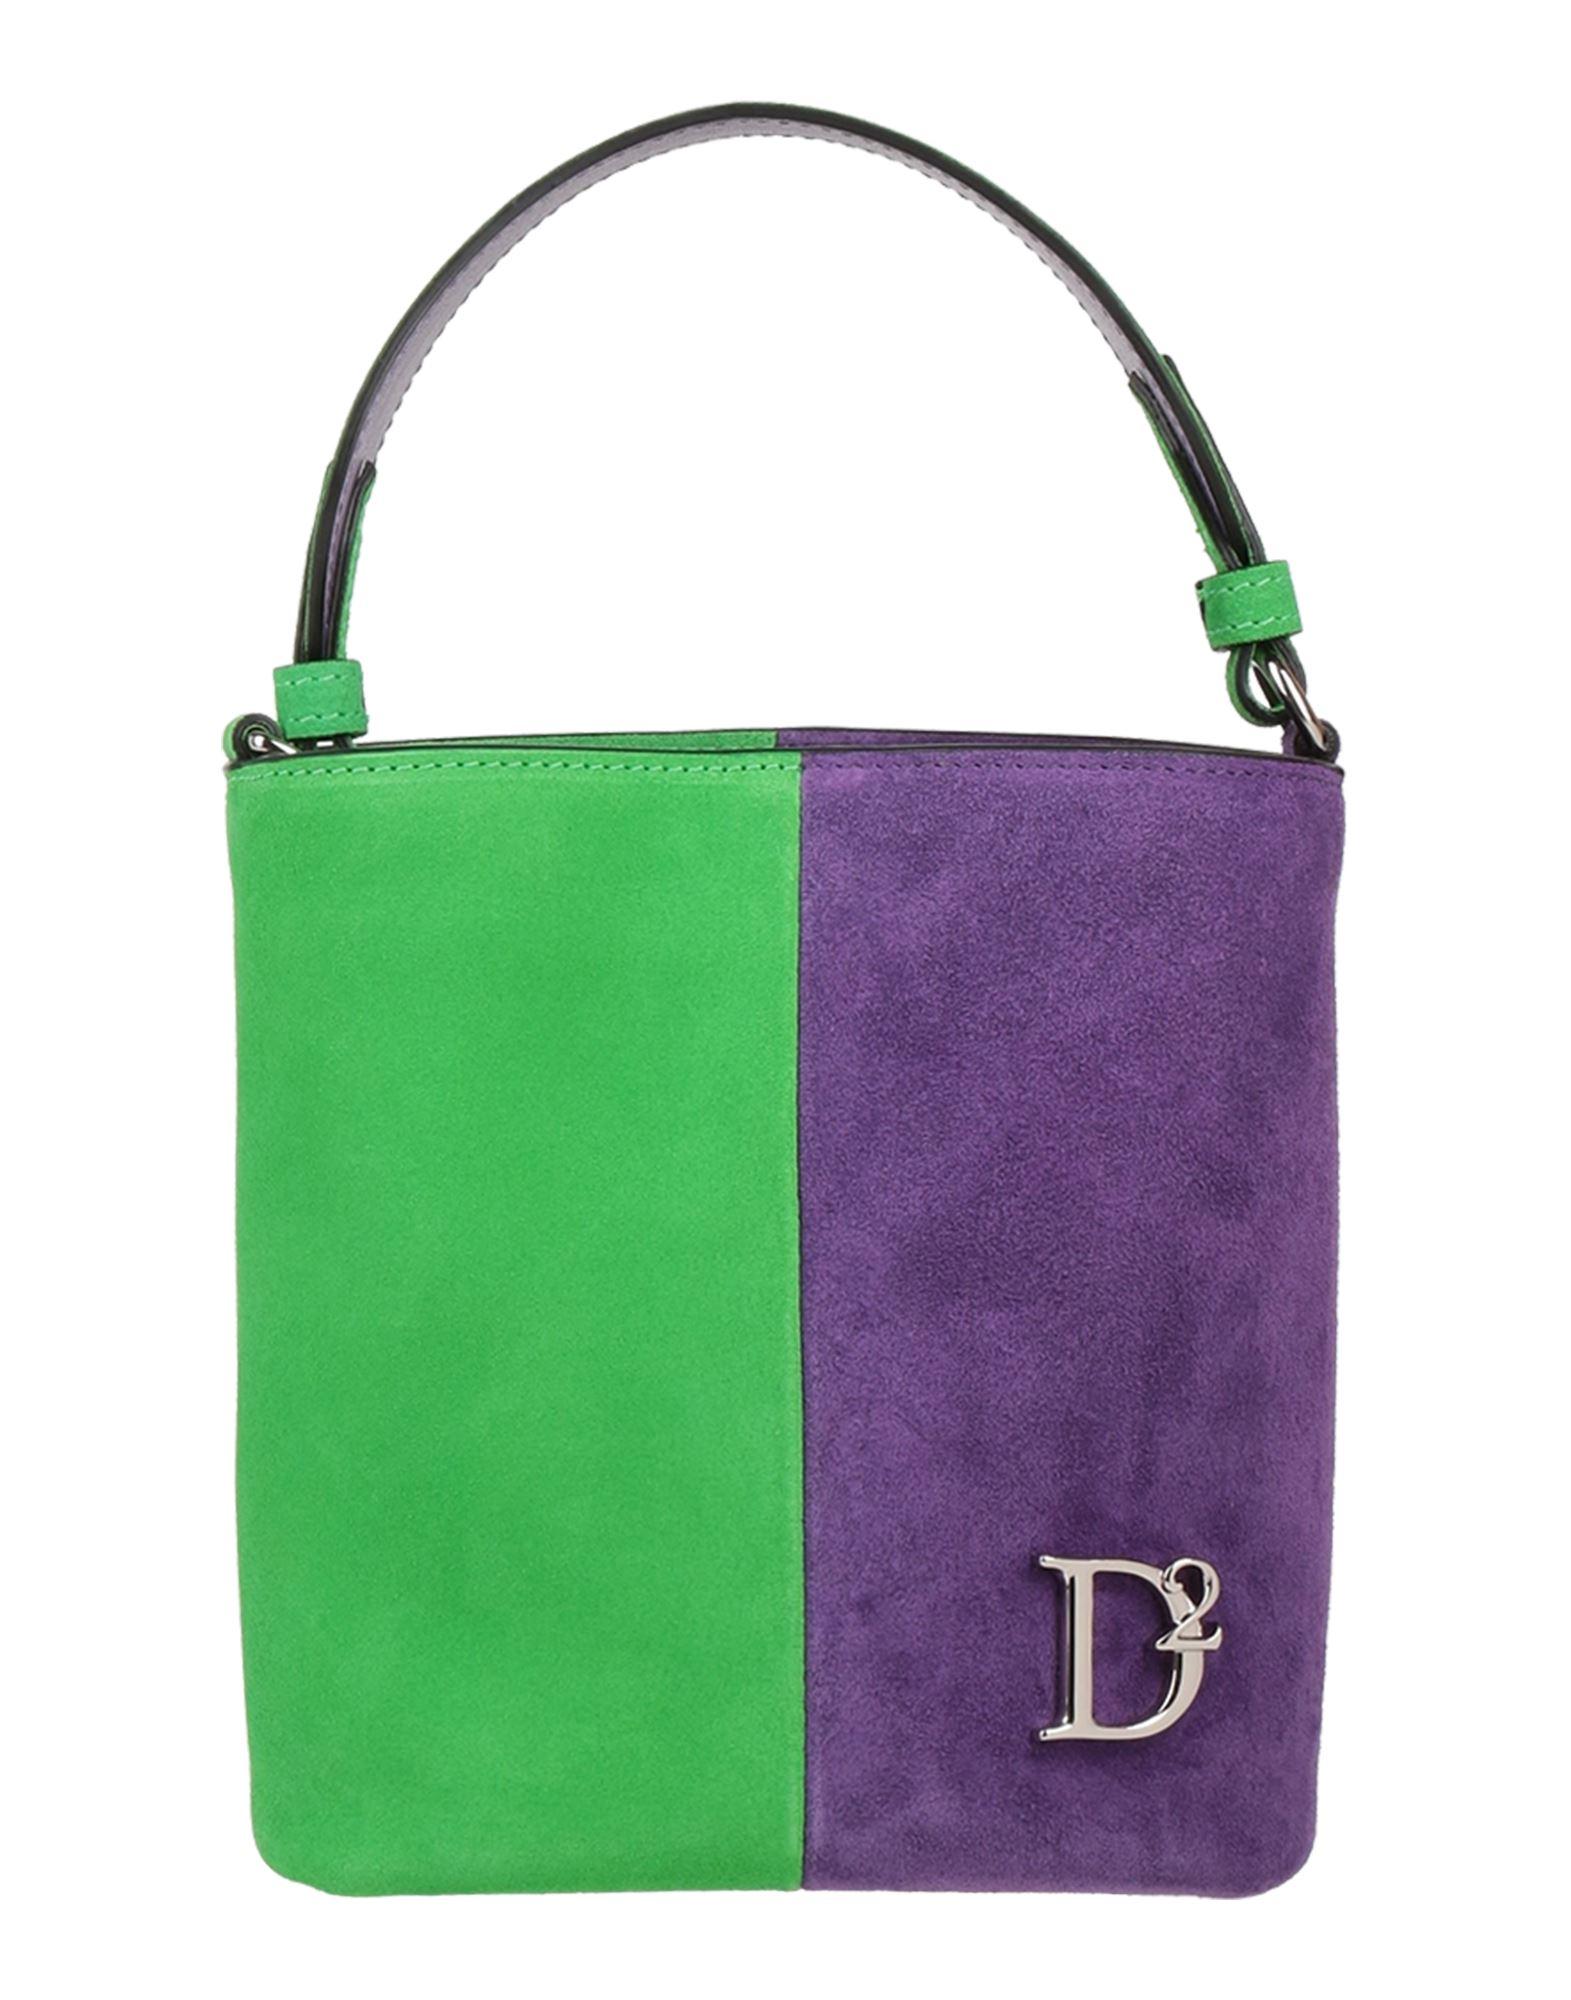 Handmade Knitted Bag, Hand Woven Bag, Boho Crochet Bag, Pink Green Color  Bag, Crochet Yarn Purse Bag, Luxury Knitting Bag, Cotton Yarn Purse - Etsy